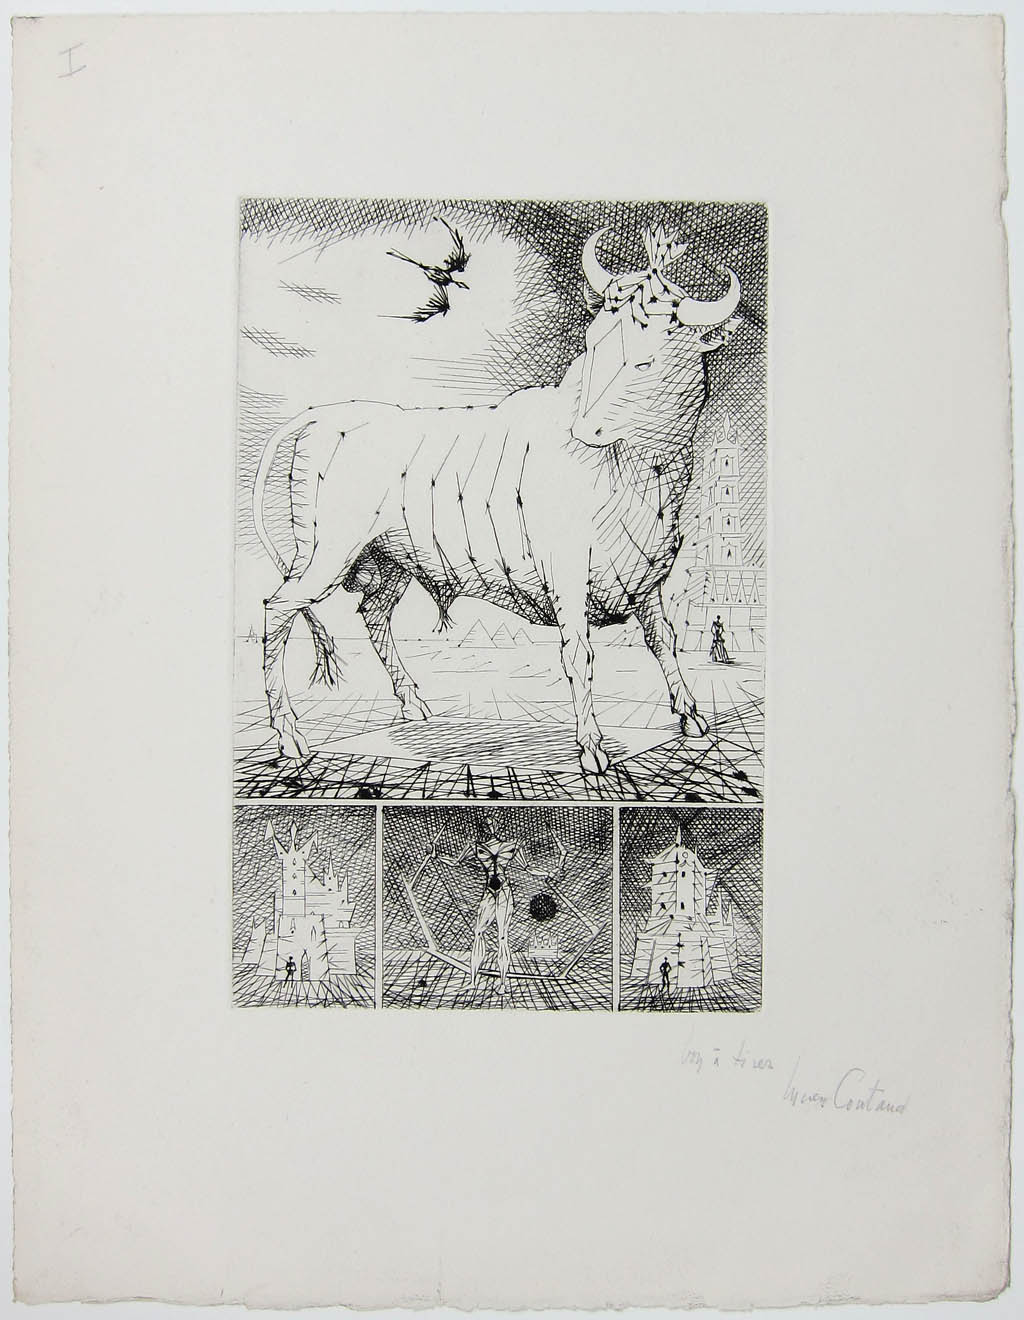 Lucien Coutaud - Le Taureau Blanc - plate I (bon a tirer) - 1956 etching